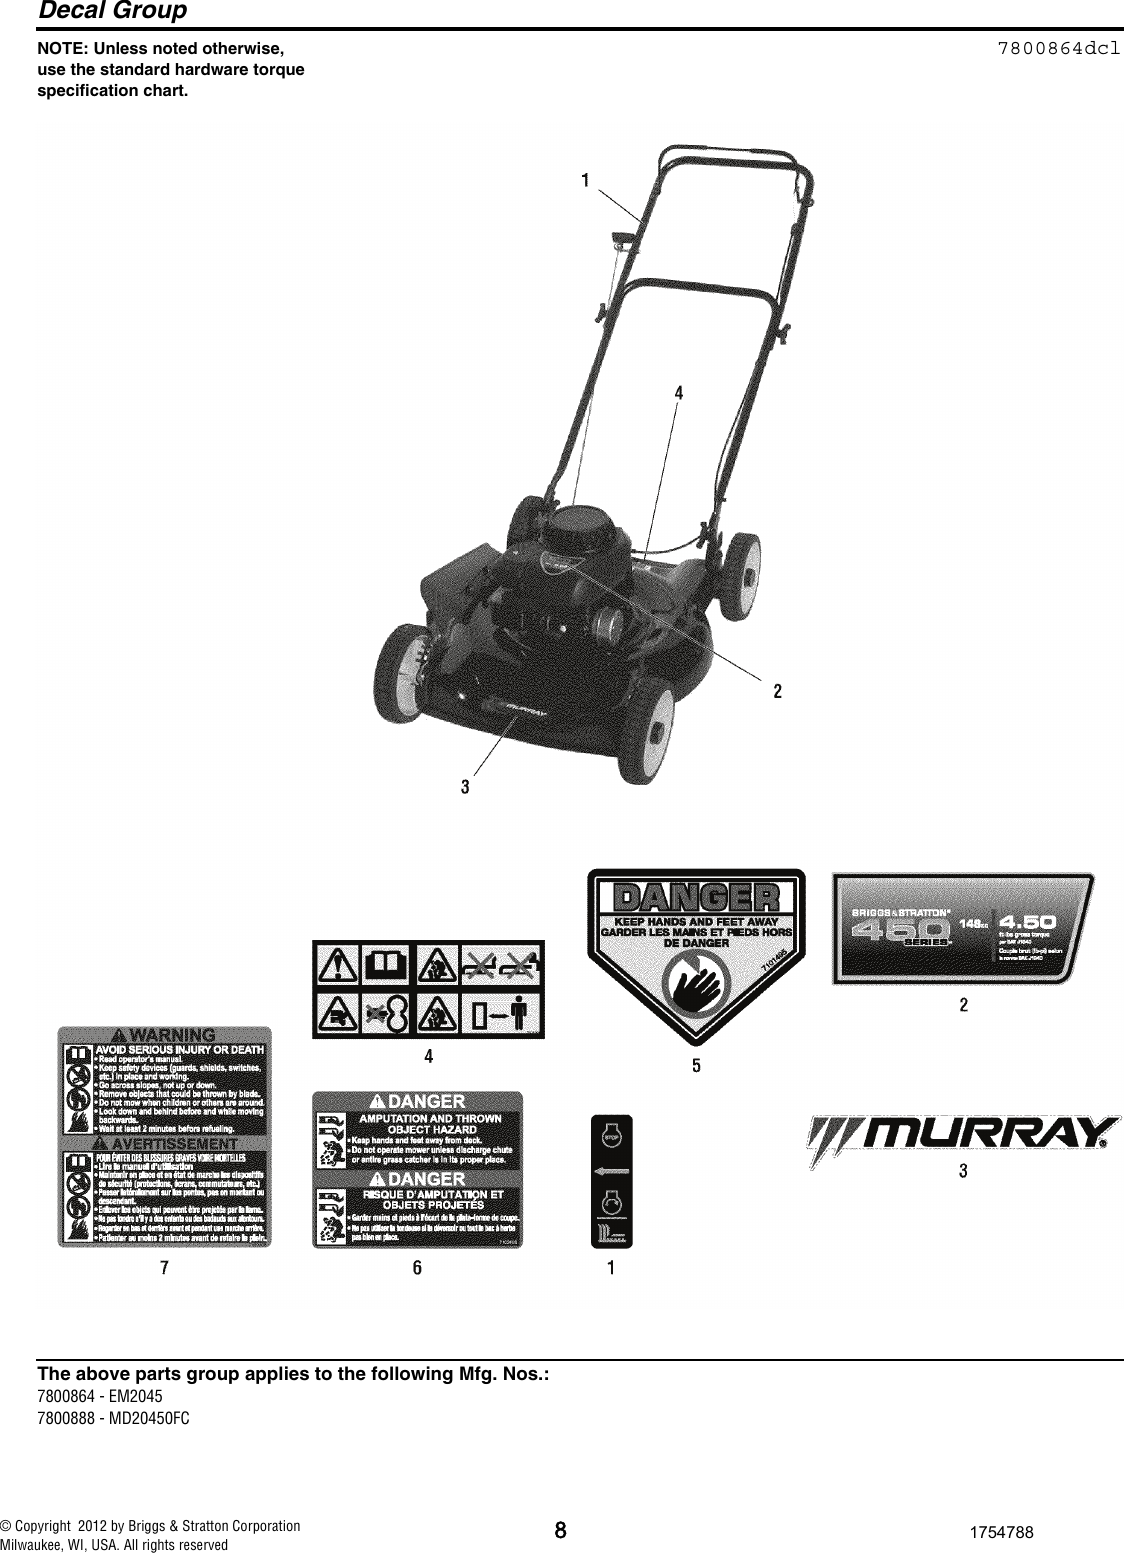 Murray select riding mower manual